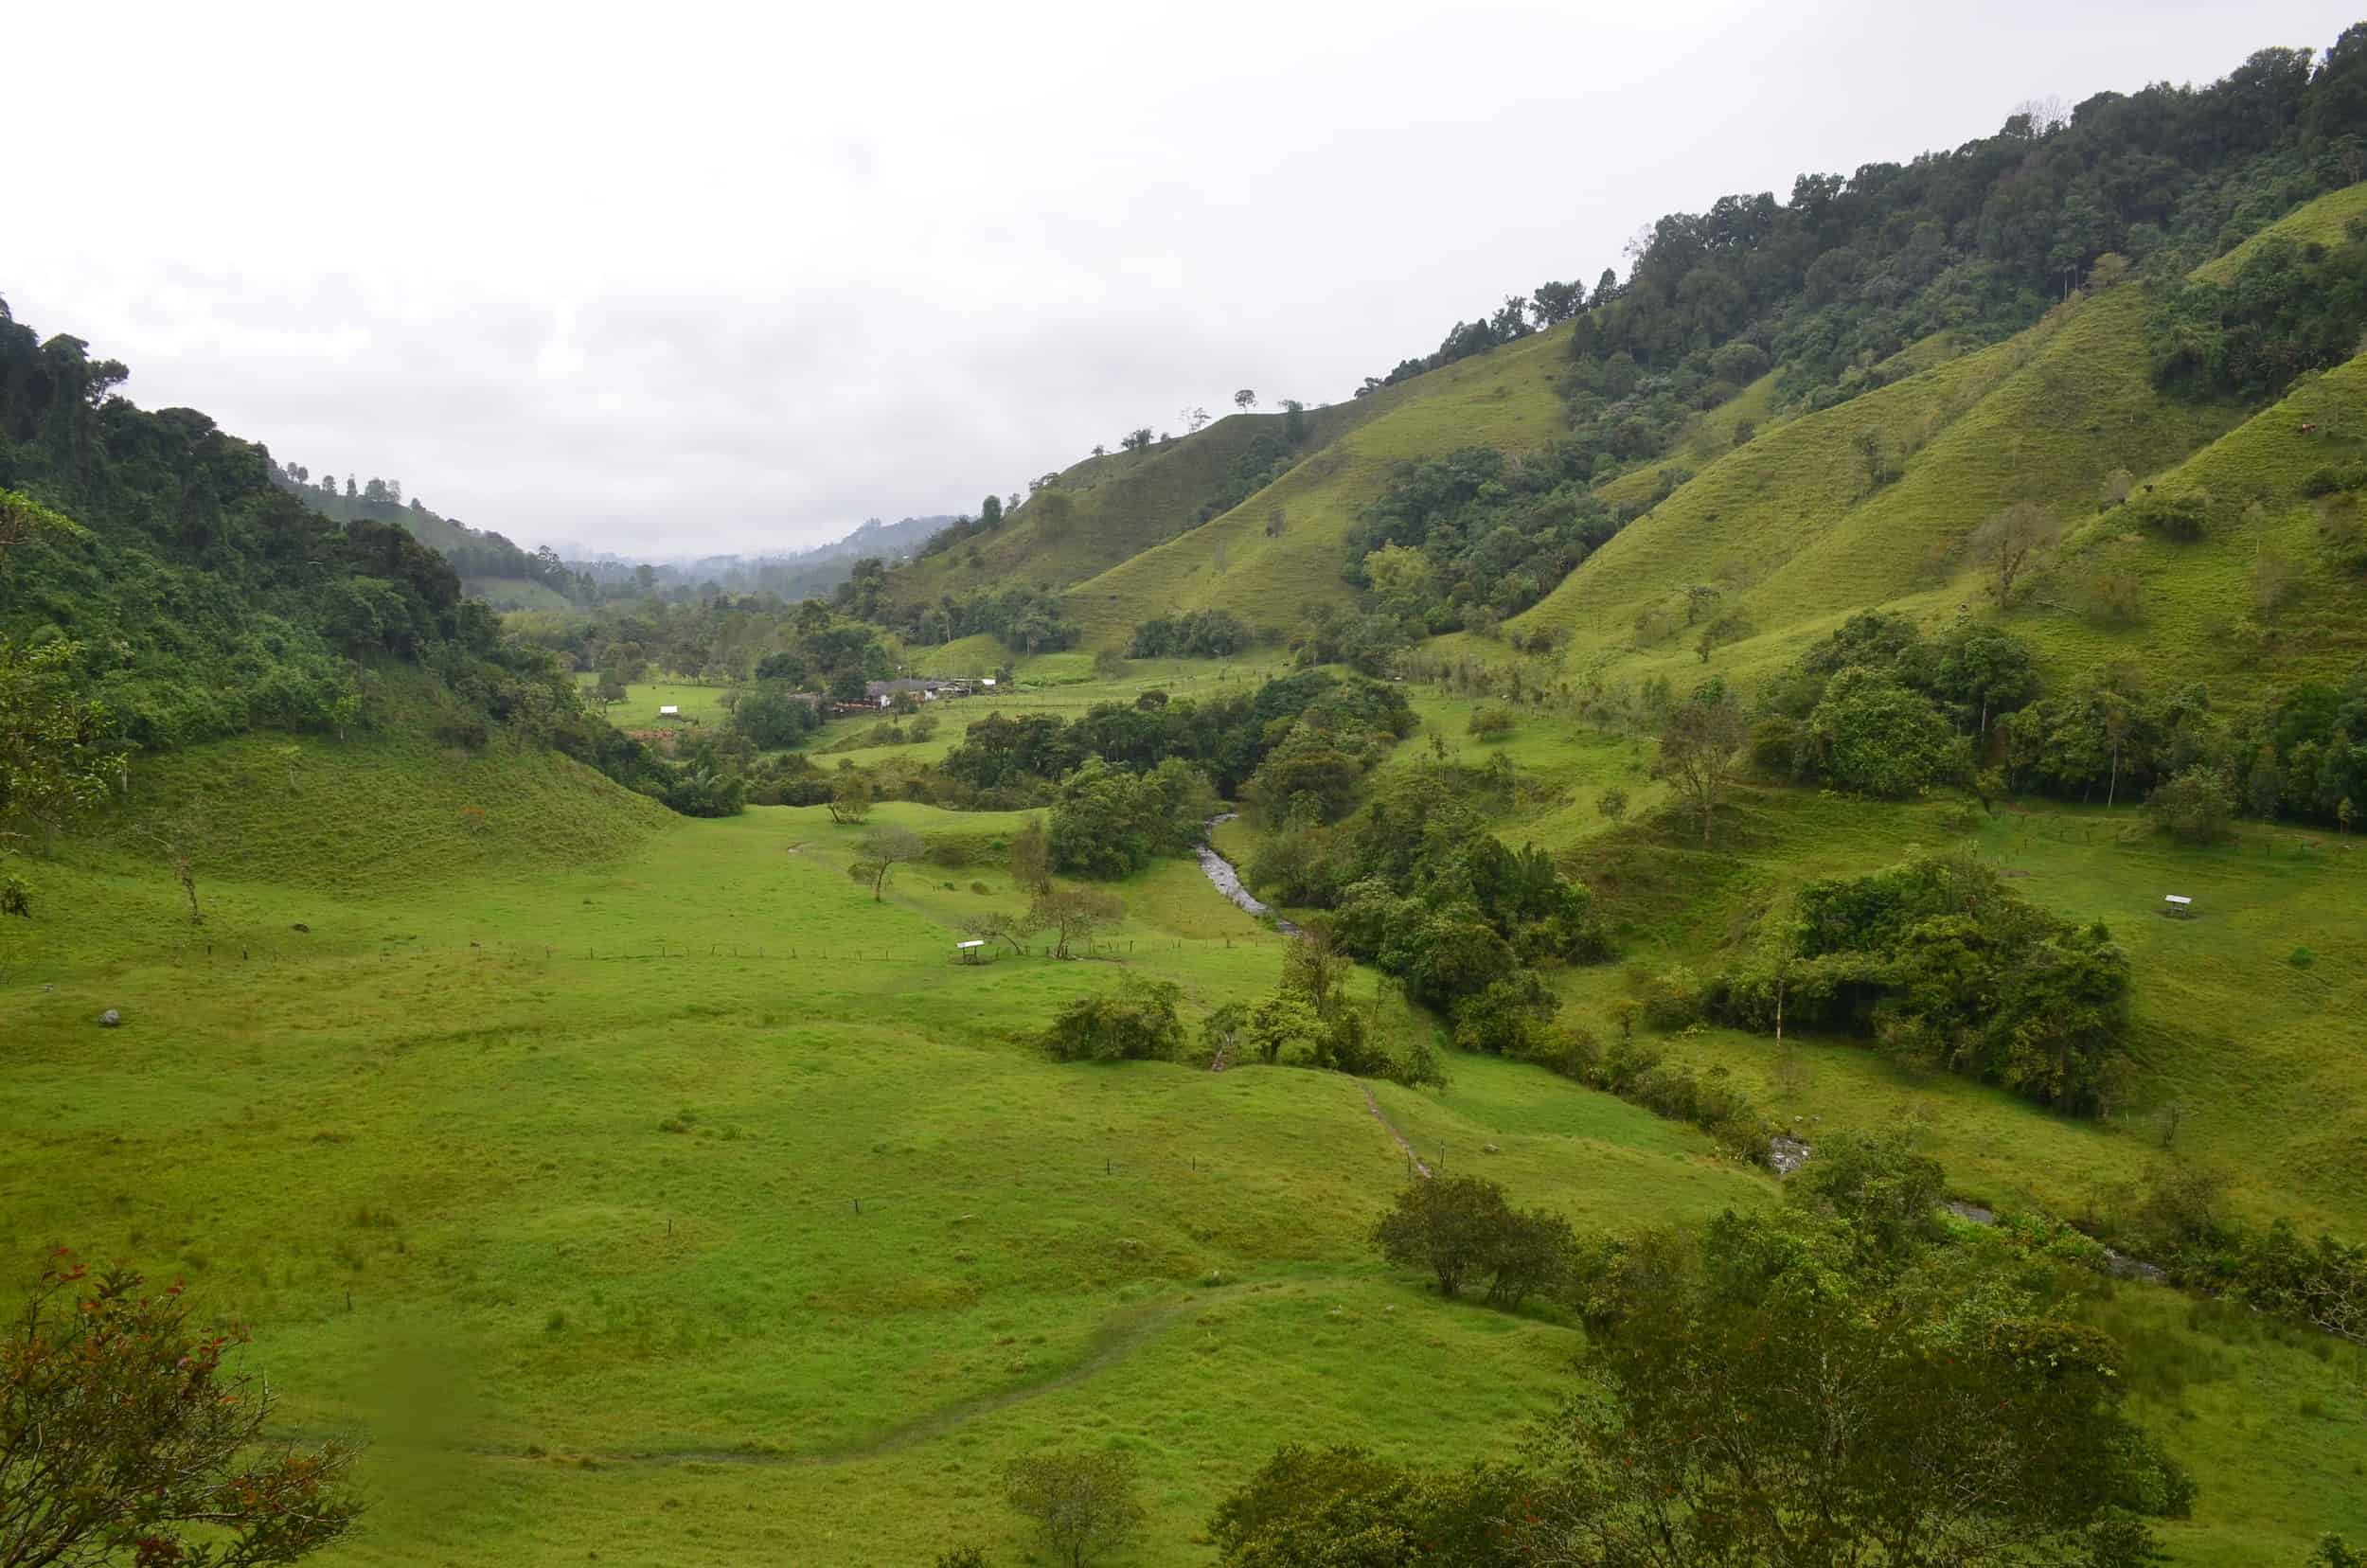 View from the Mirador at Santa Rita Nature Reserve in Boquía, Salento, Quindío, Colombia